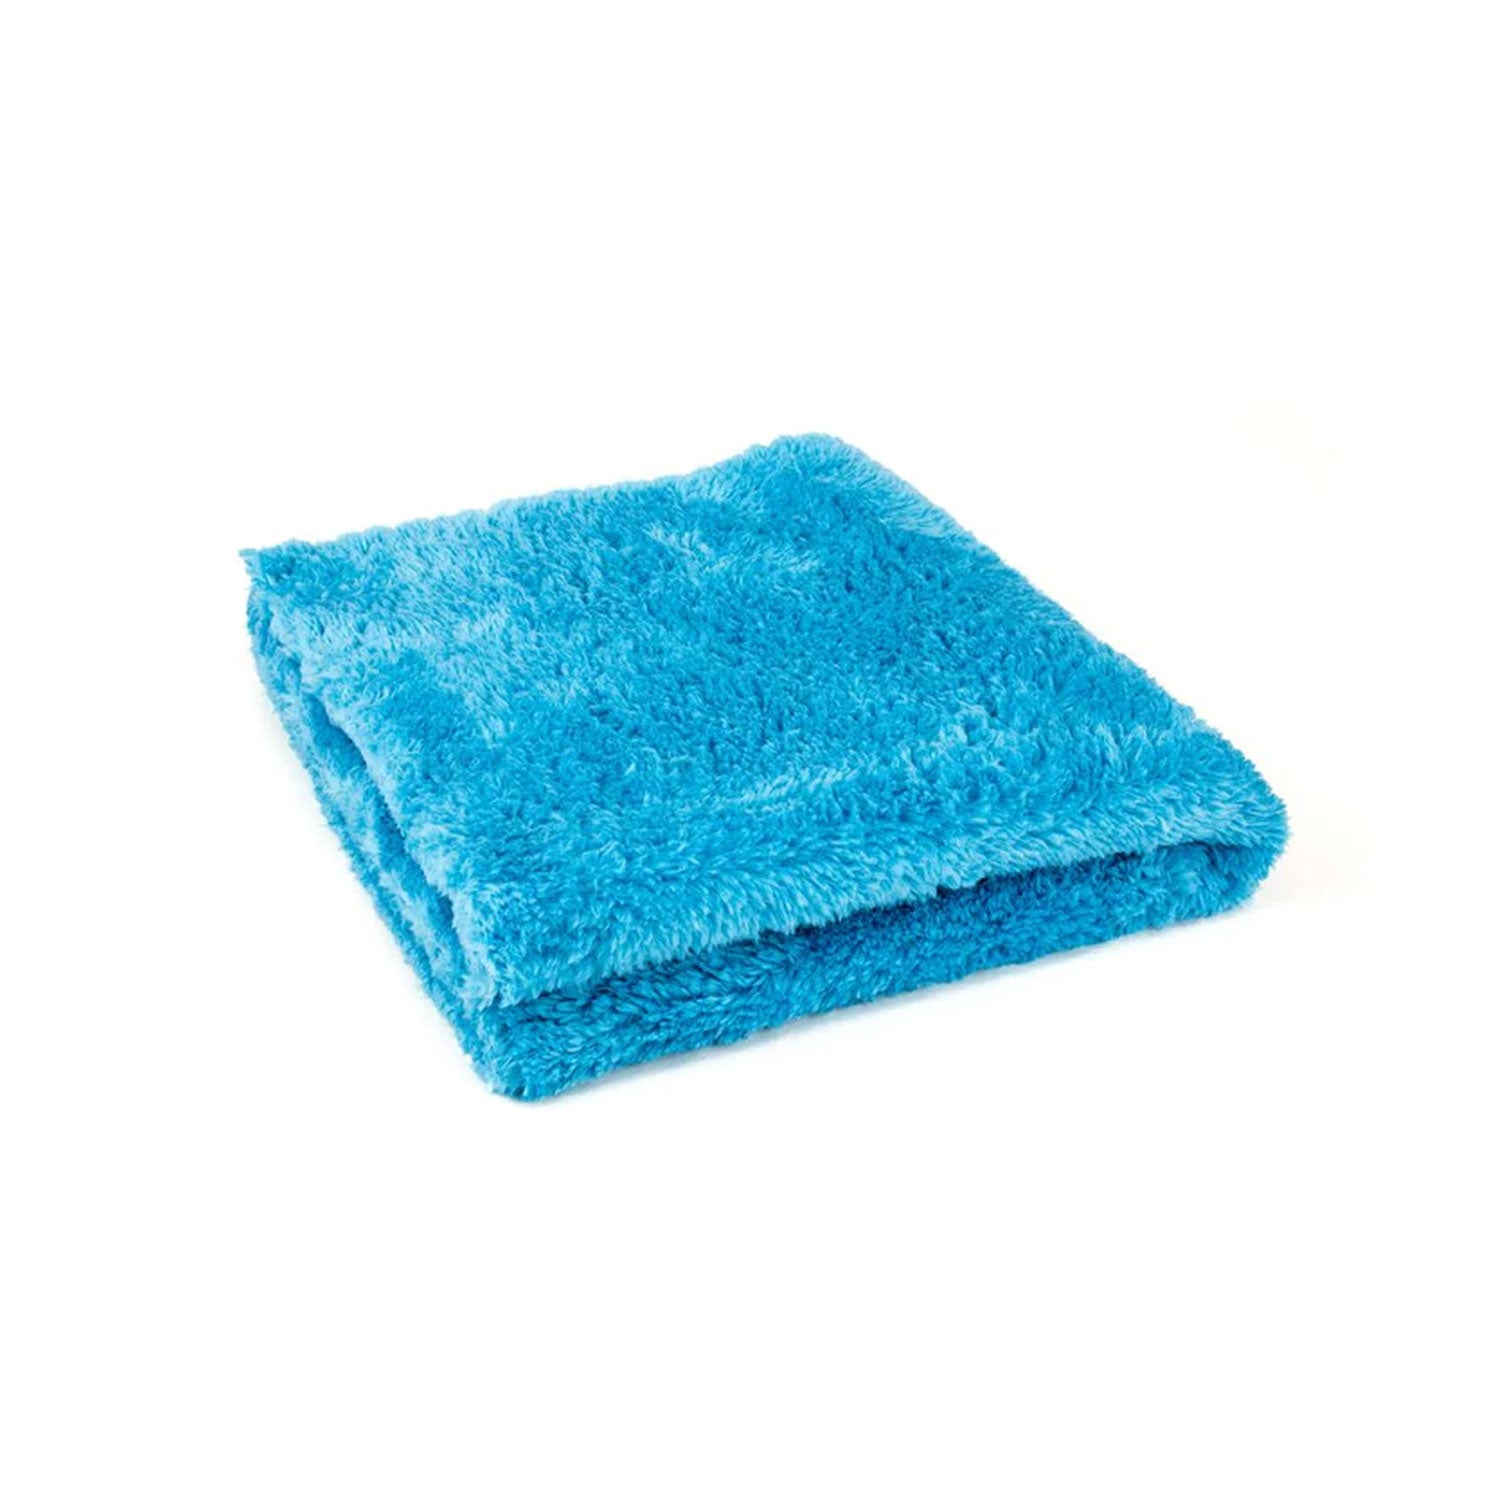 LIQUID8R Drying Towel - AQUA BLUE / ICE GREY (20x 24)